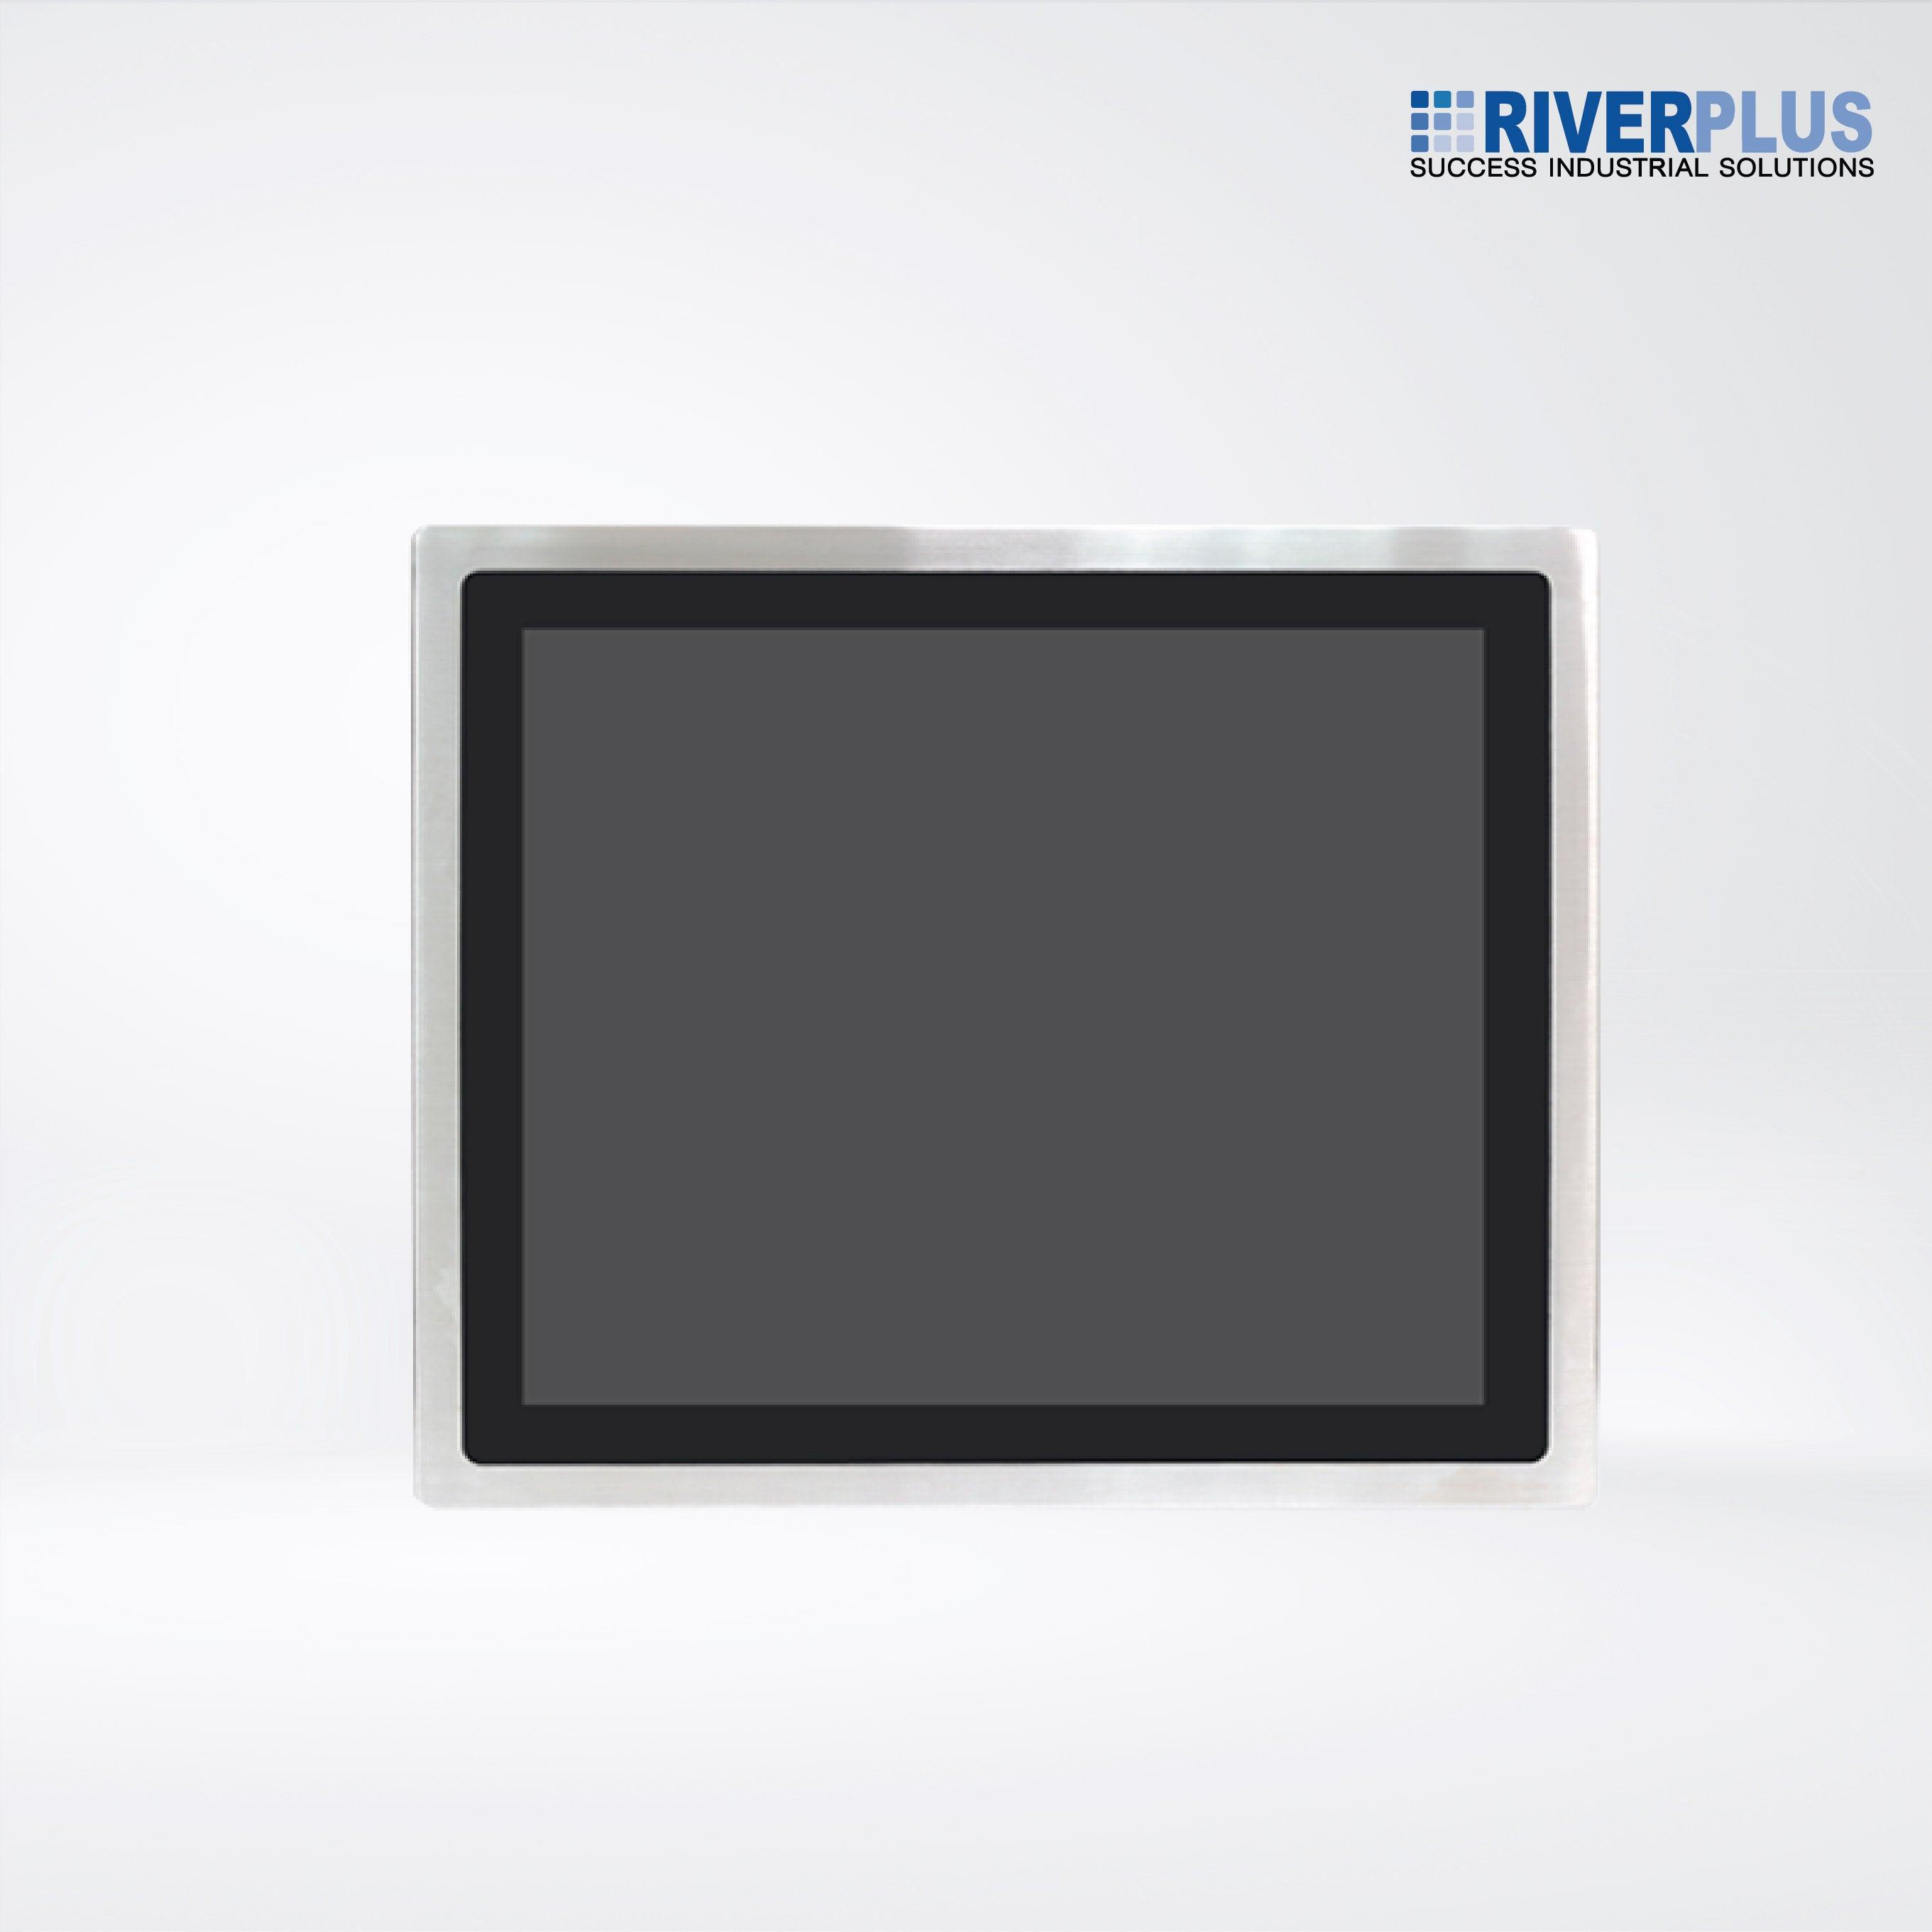 AEx-919AP 19” Intel Skylake IP66 Stainless Steel Panel PC, Luminance : 350 (cd/m²) - Riverplus